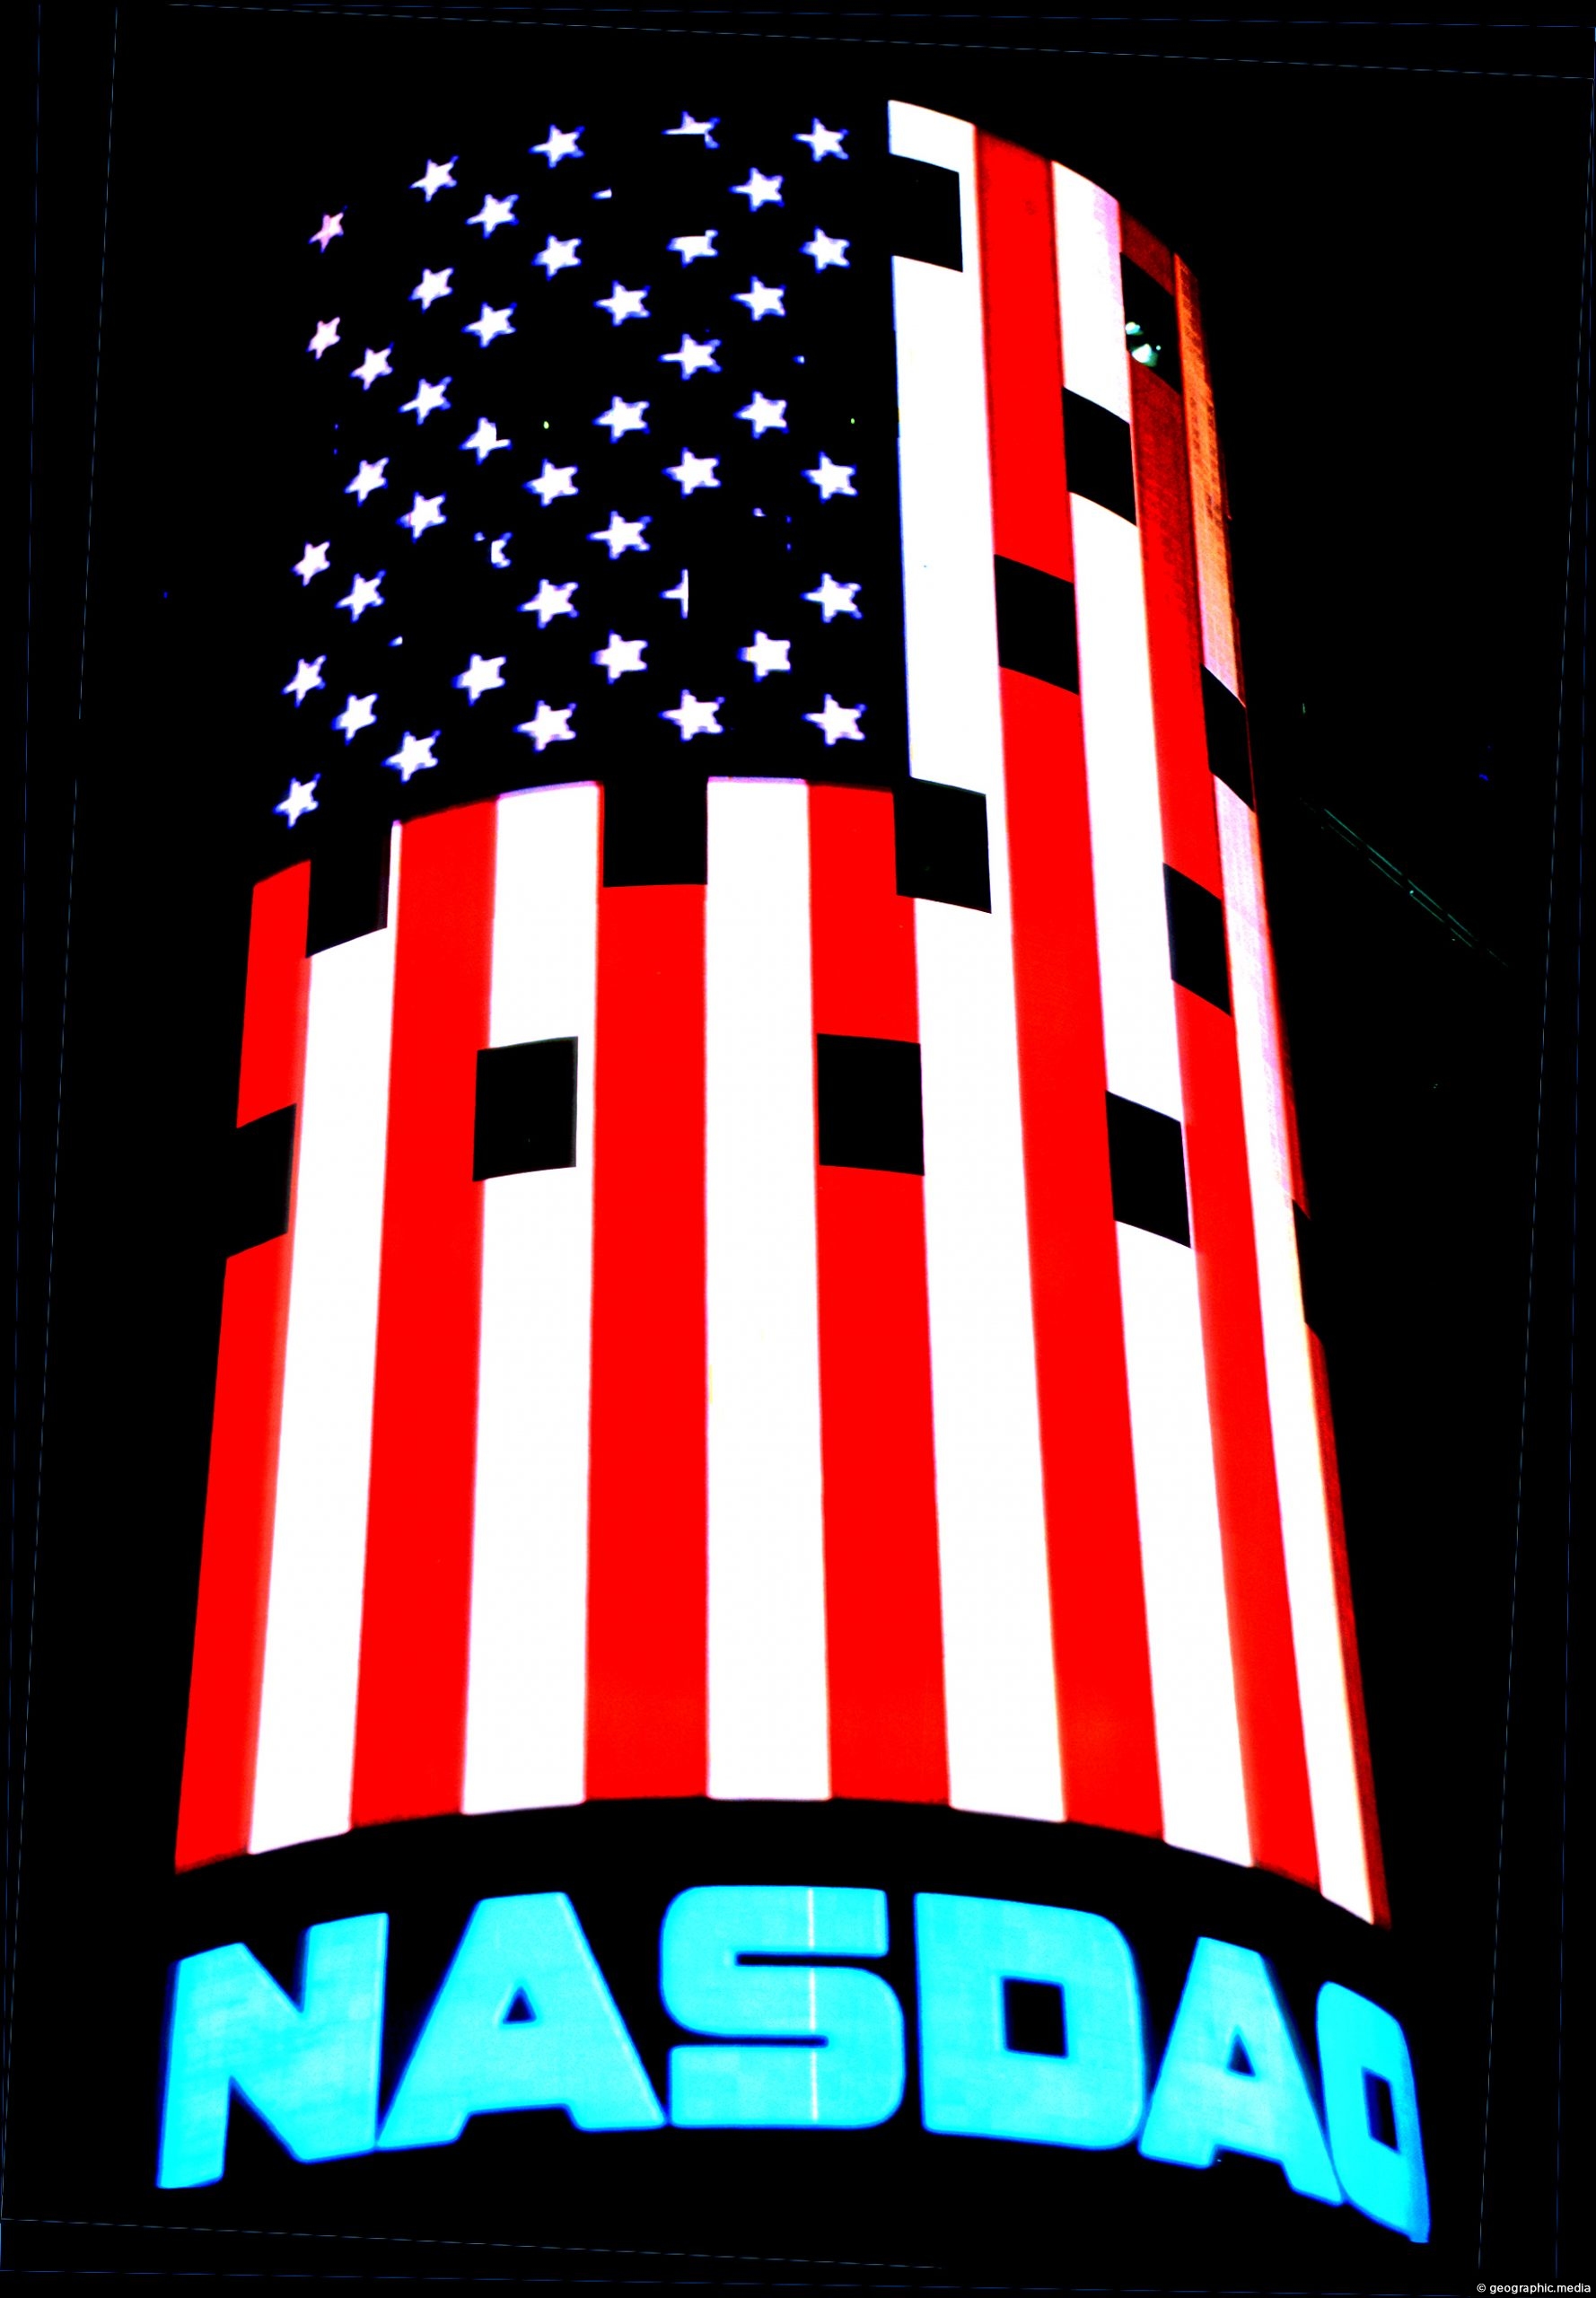 NASDAQ Sign in Times Square